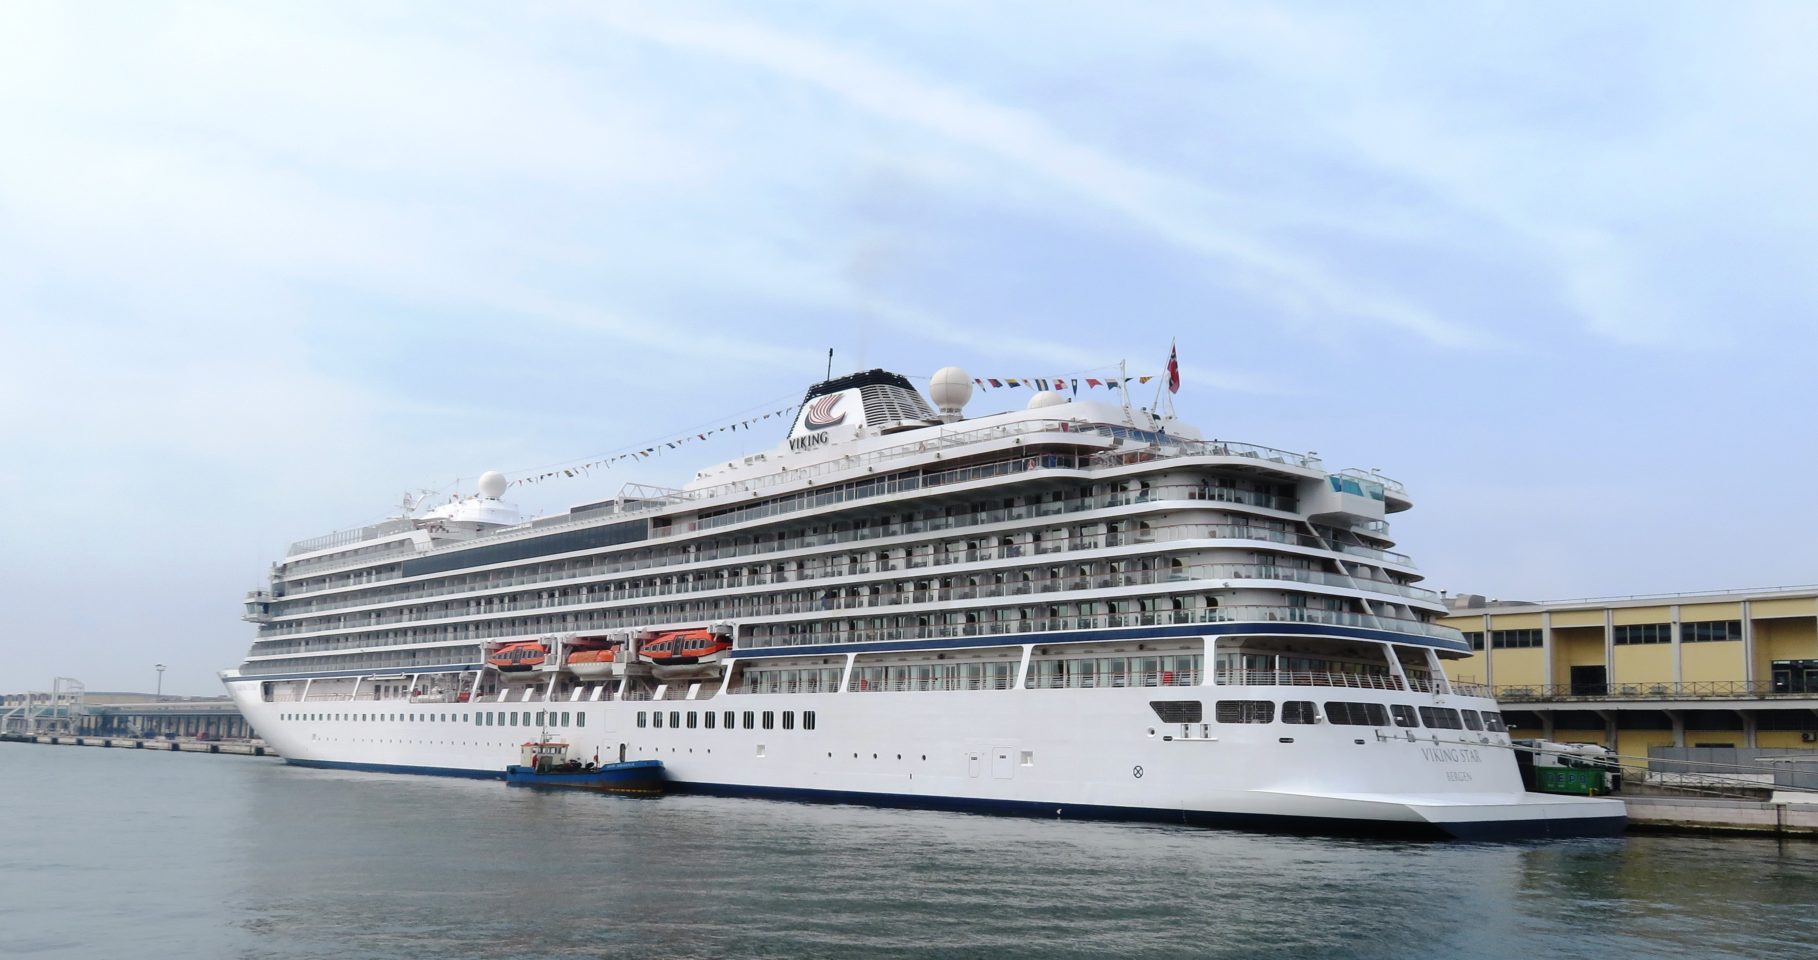 Viking Ocean Cruise Ships ~ Viking Star docked in Venice Italy